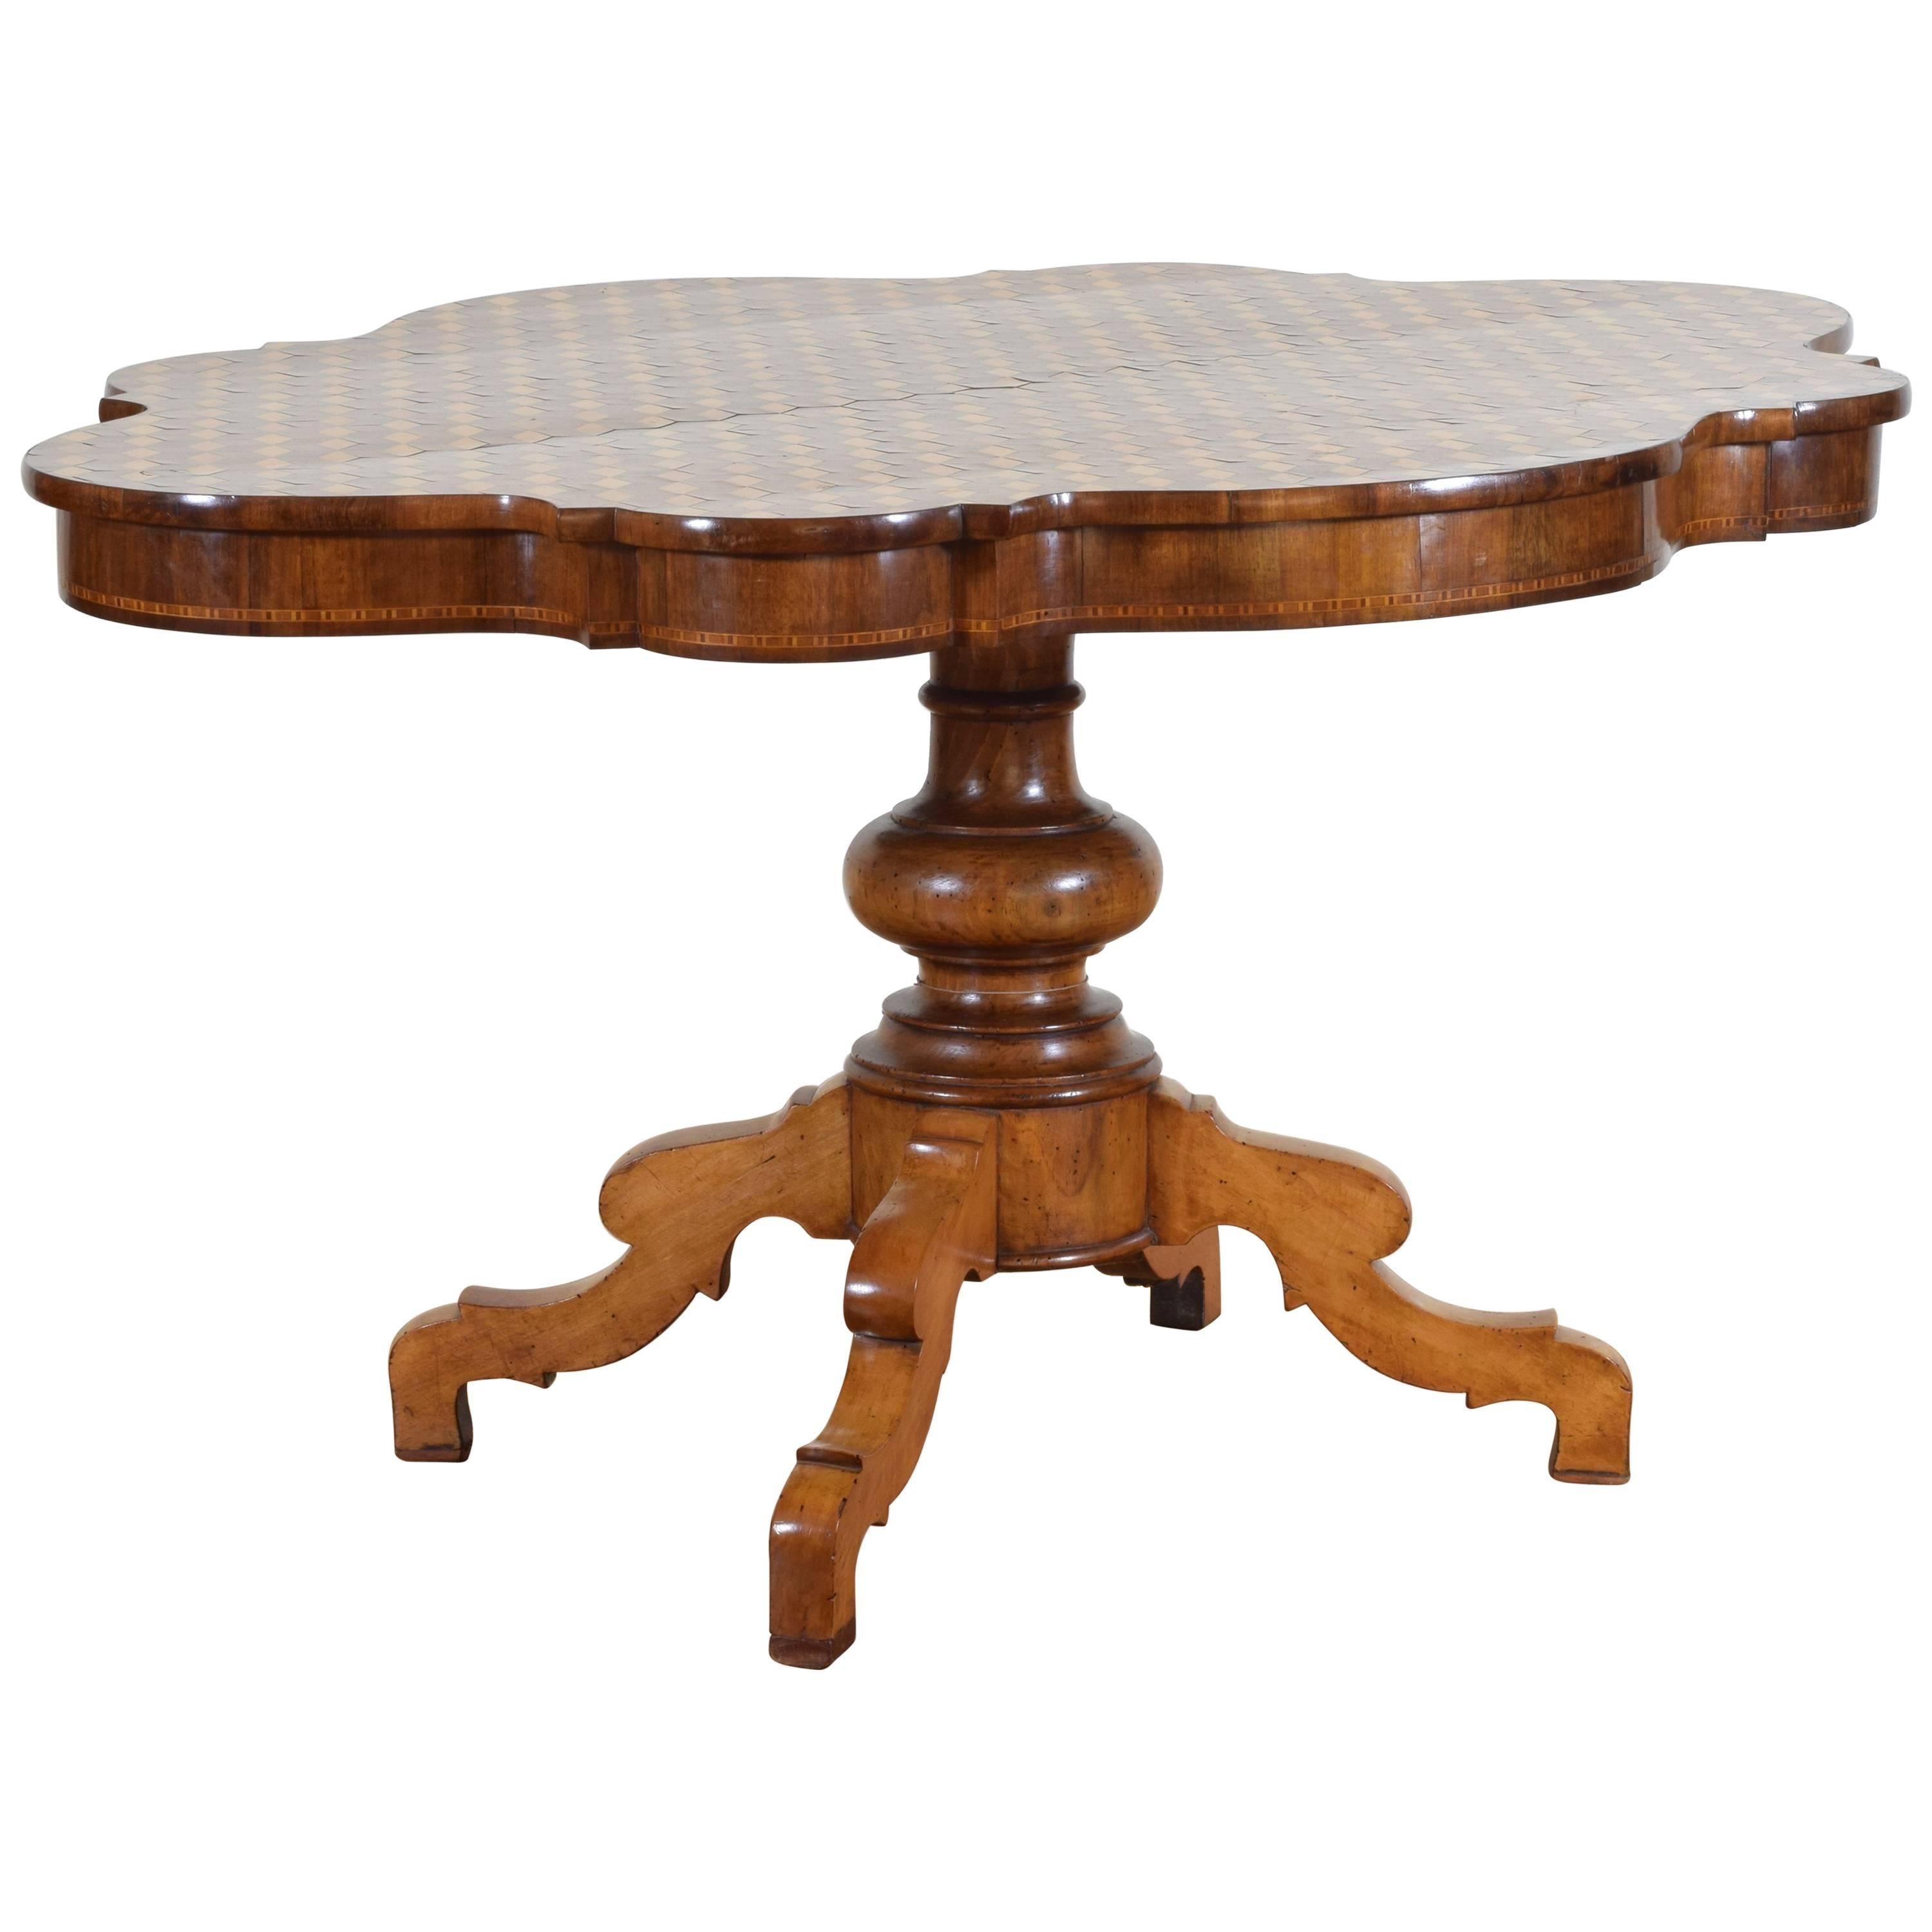 Italian, Lombardy, Walnut and Marble Parquetry Veneered Table, circa 1840-1850